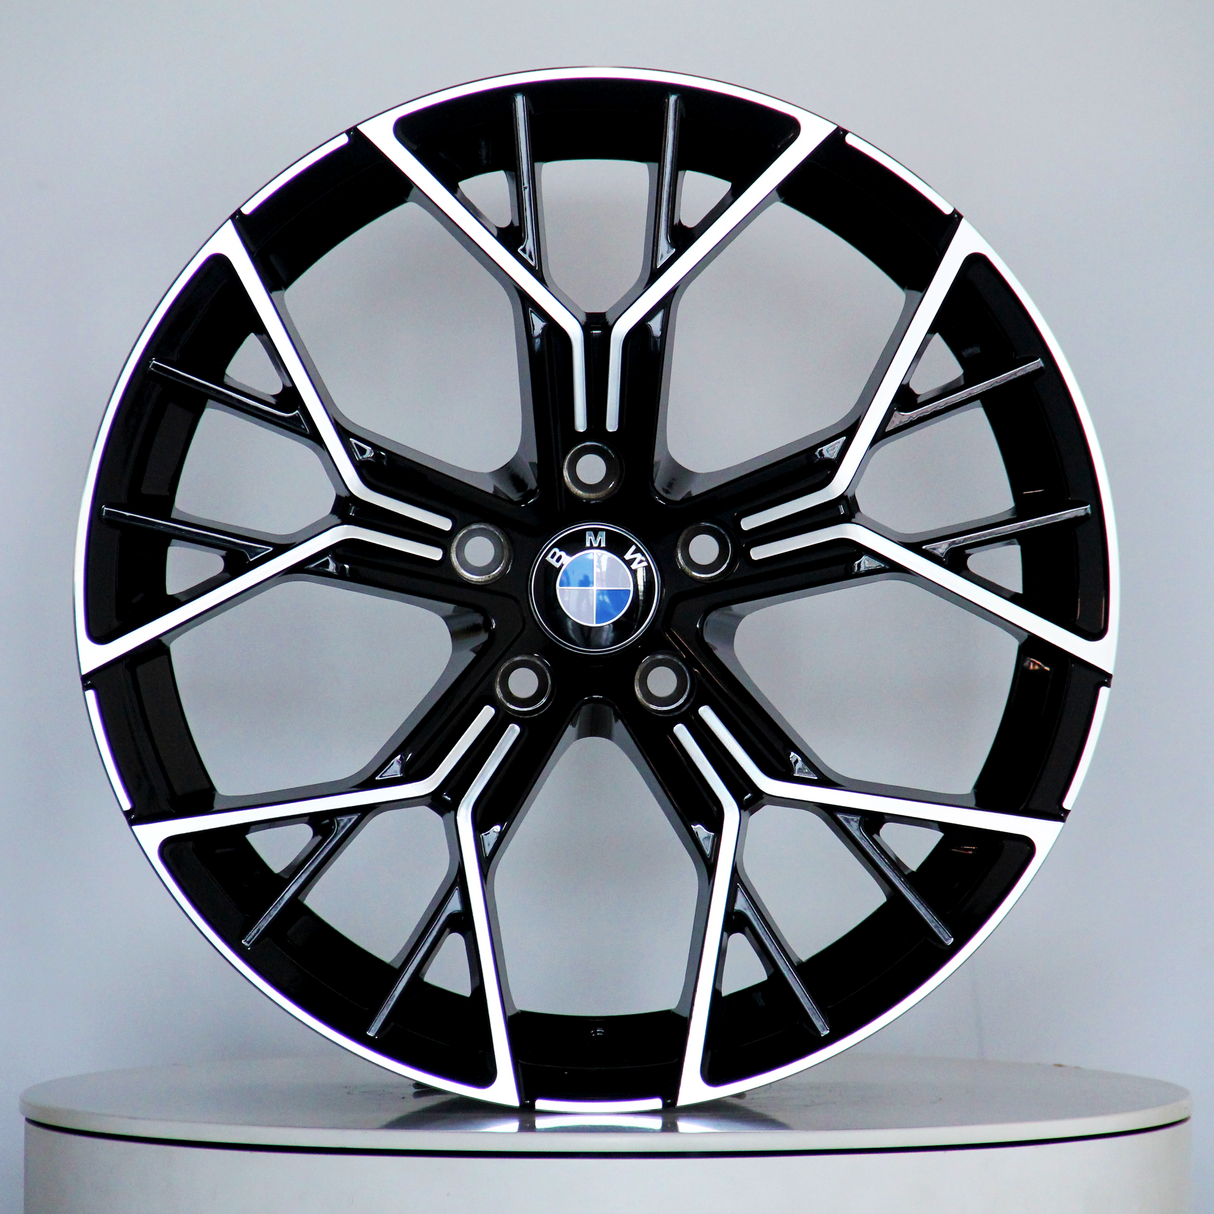 2 Series - F22/F23: 18" Diamond Cut Performance Style Alloy Wheels 14-21